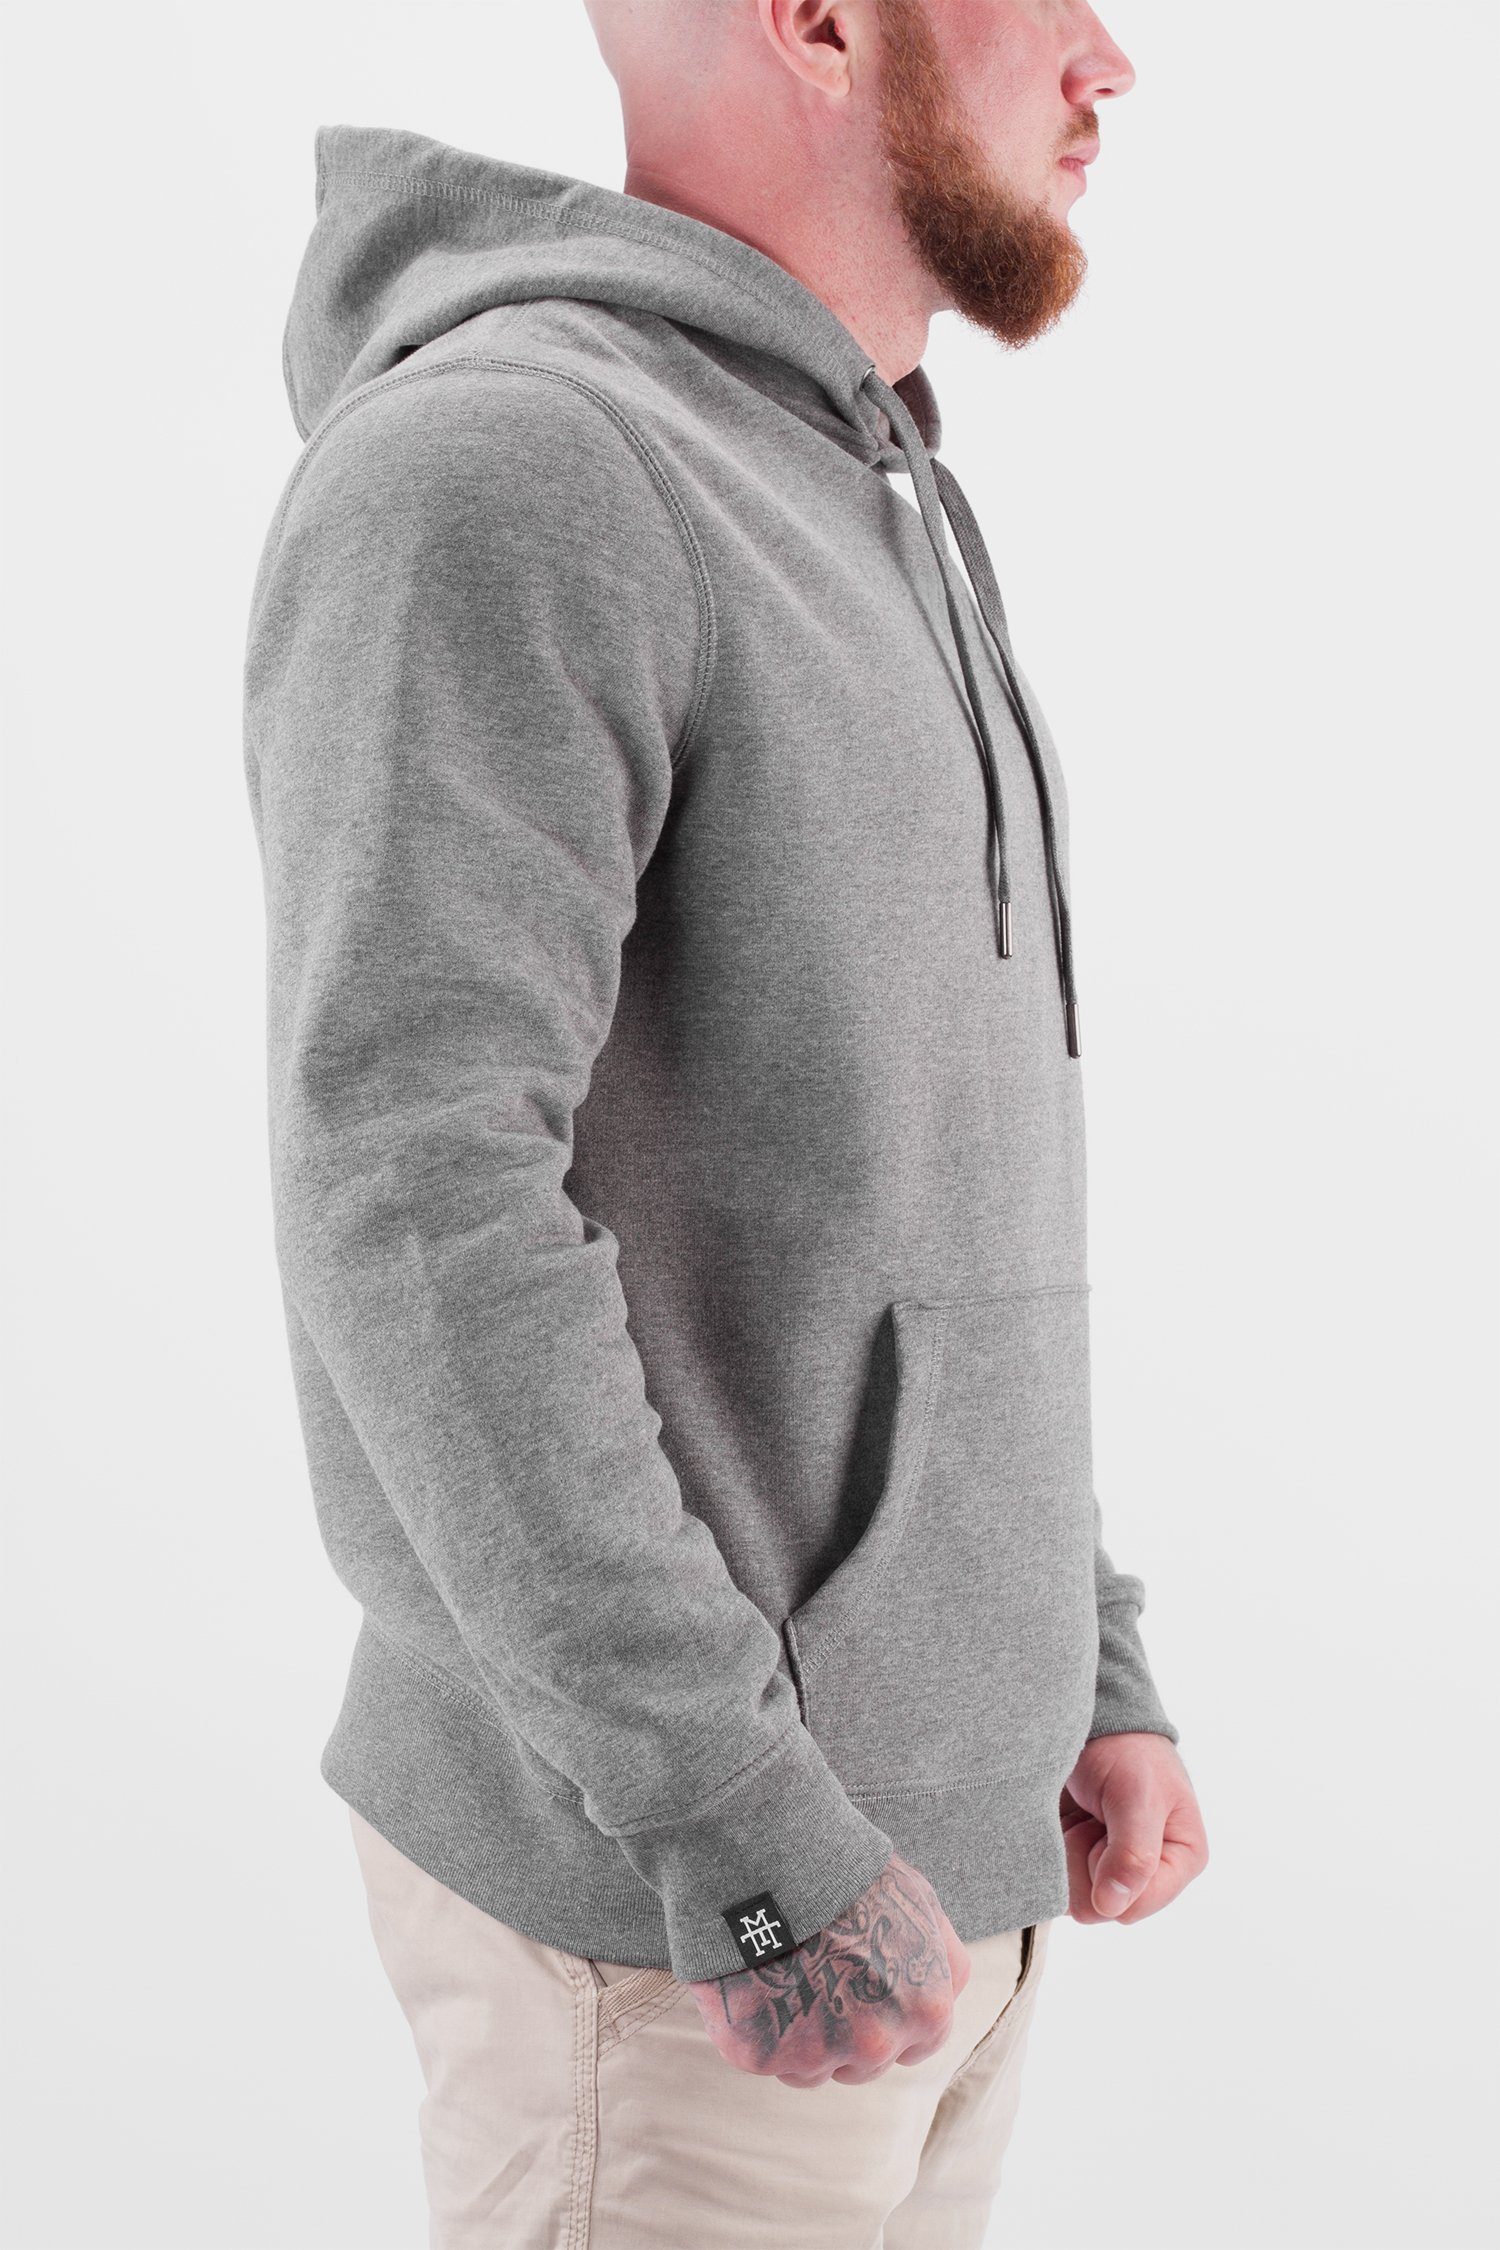 Hoodie M13 - Bully Hooded Manufaktur13 Asphalt mit Metallkordeln Kapuzenpullover Sweater